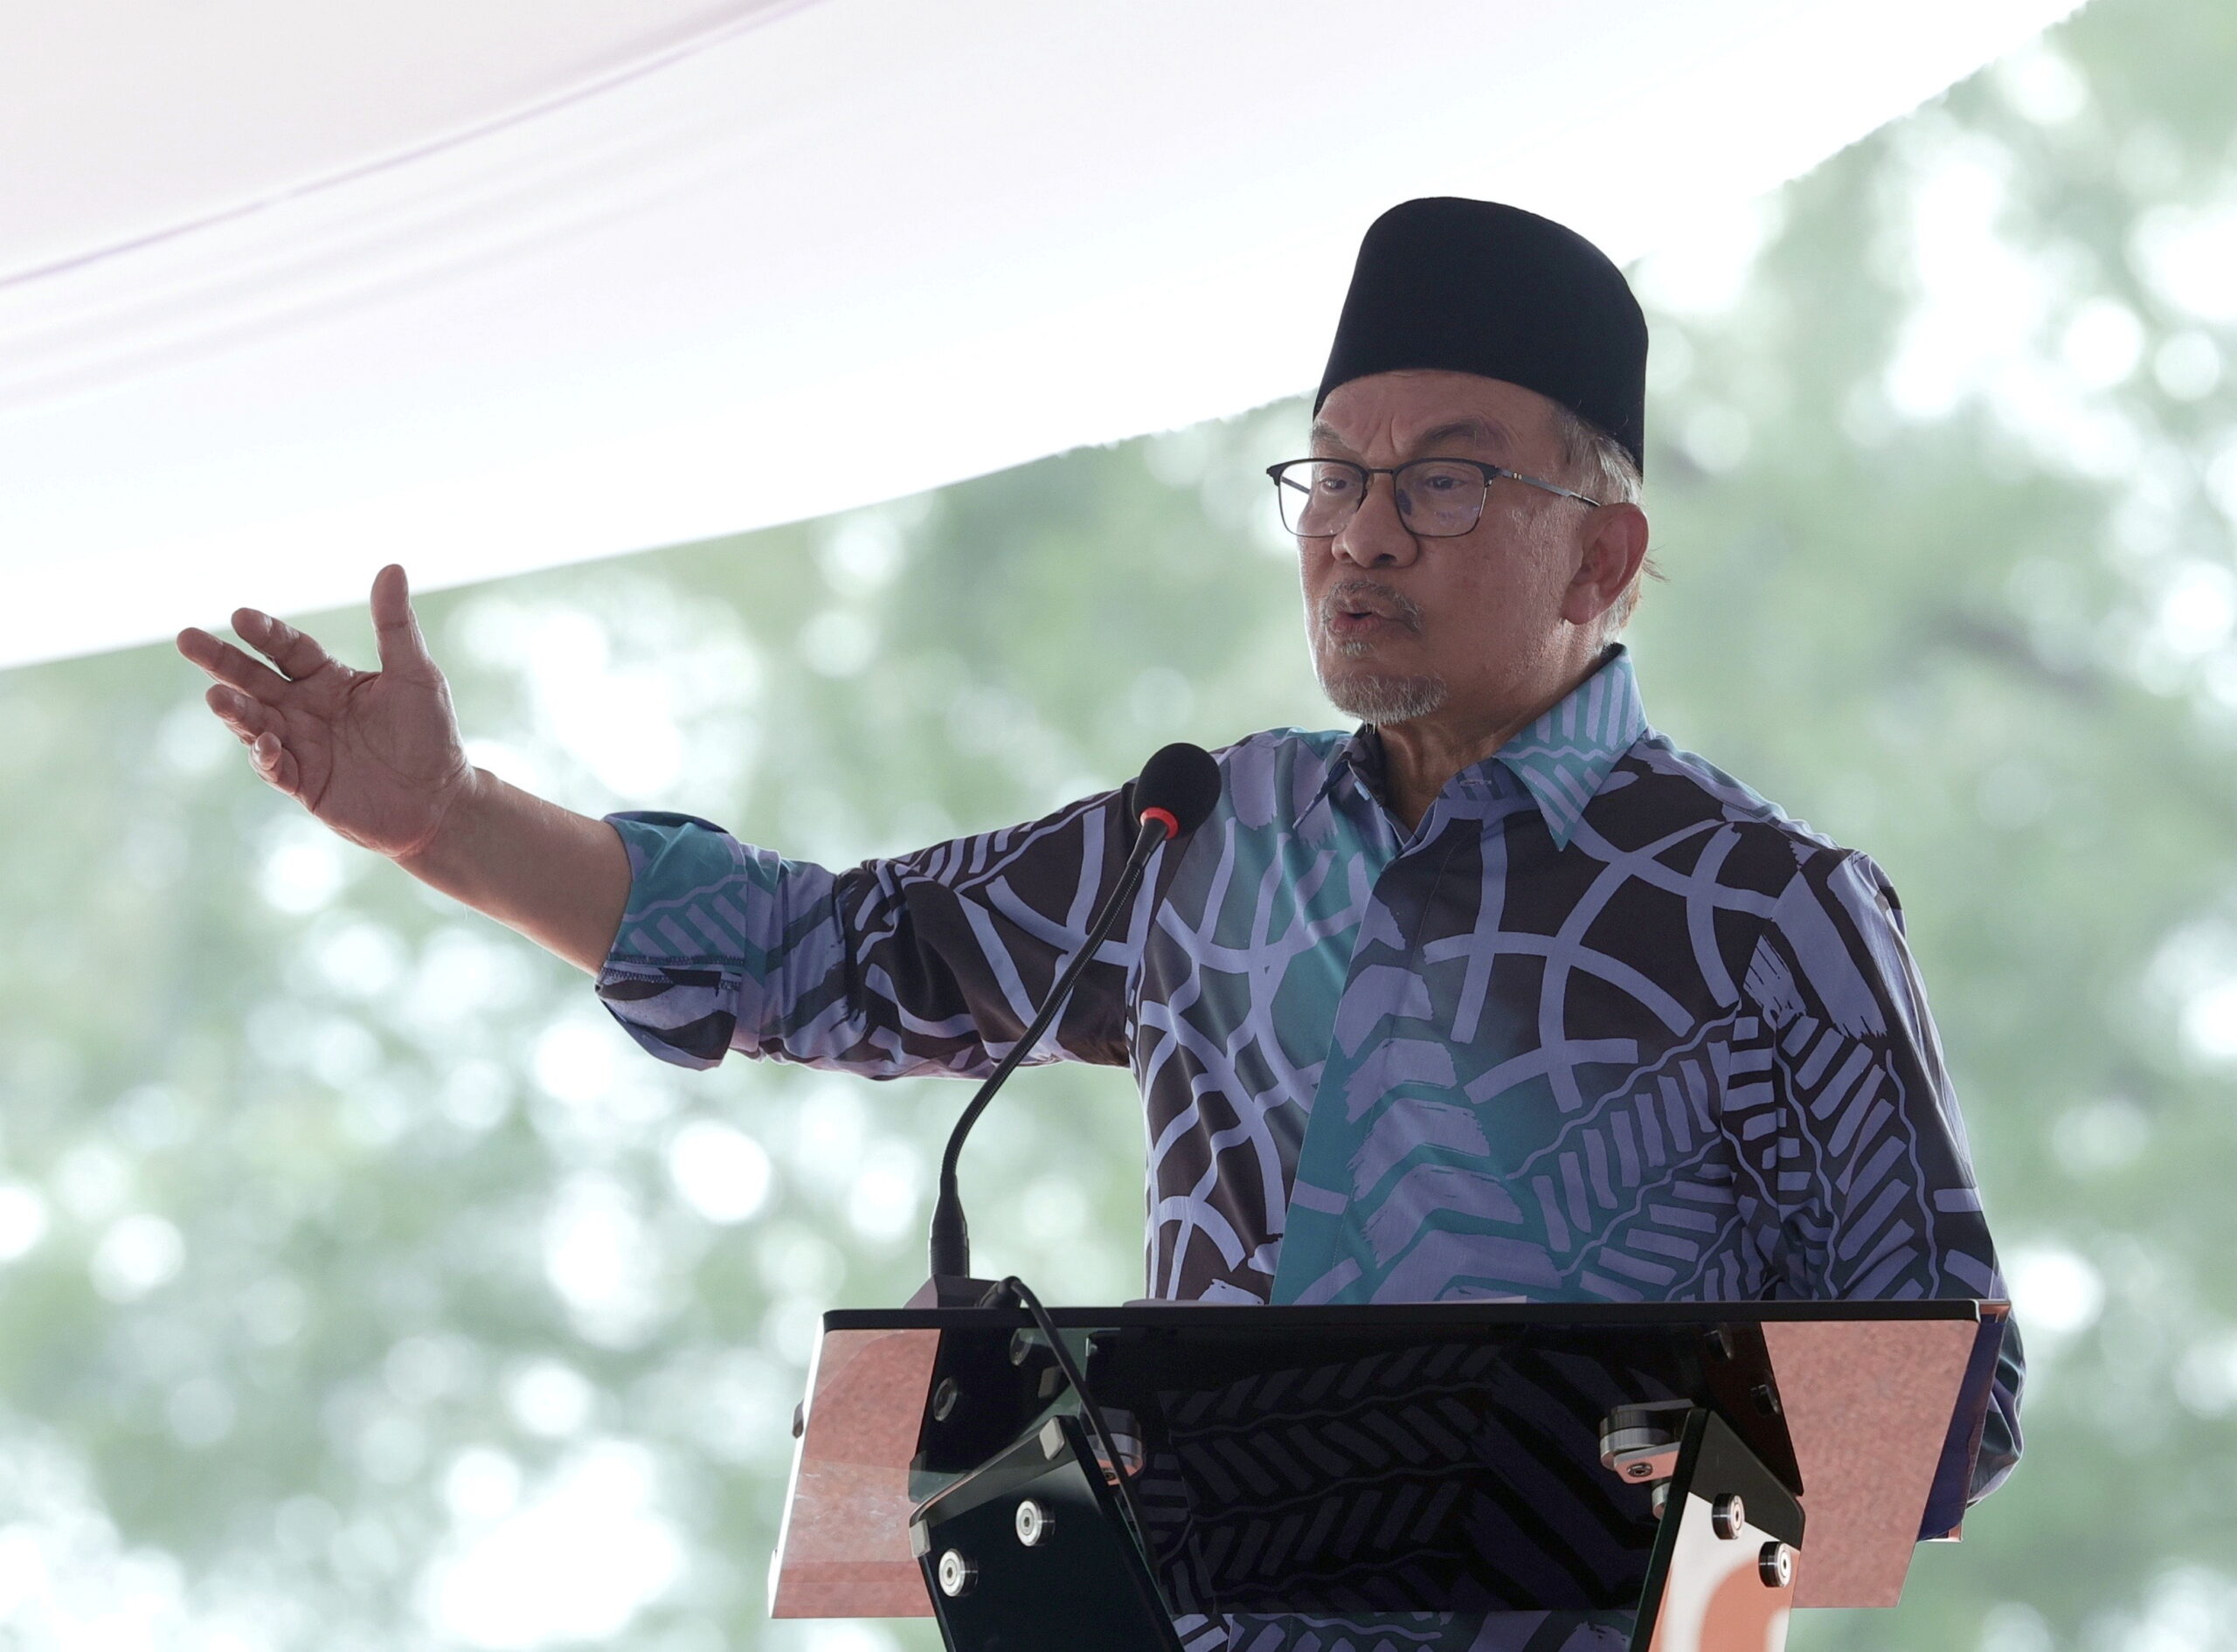 Desakan Malaysia tarik diri daripada Rimpac: Kita perlu ambil pendekatan rasional: PM